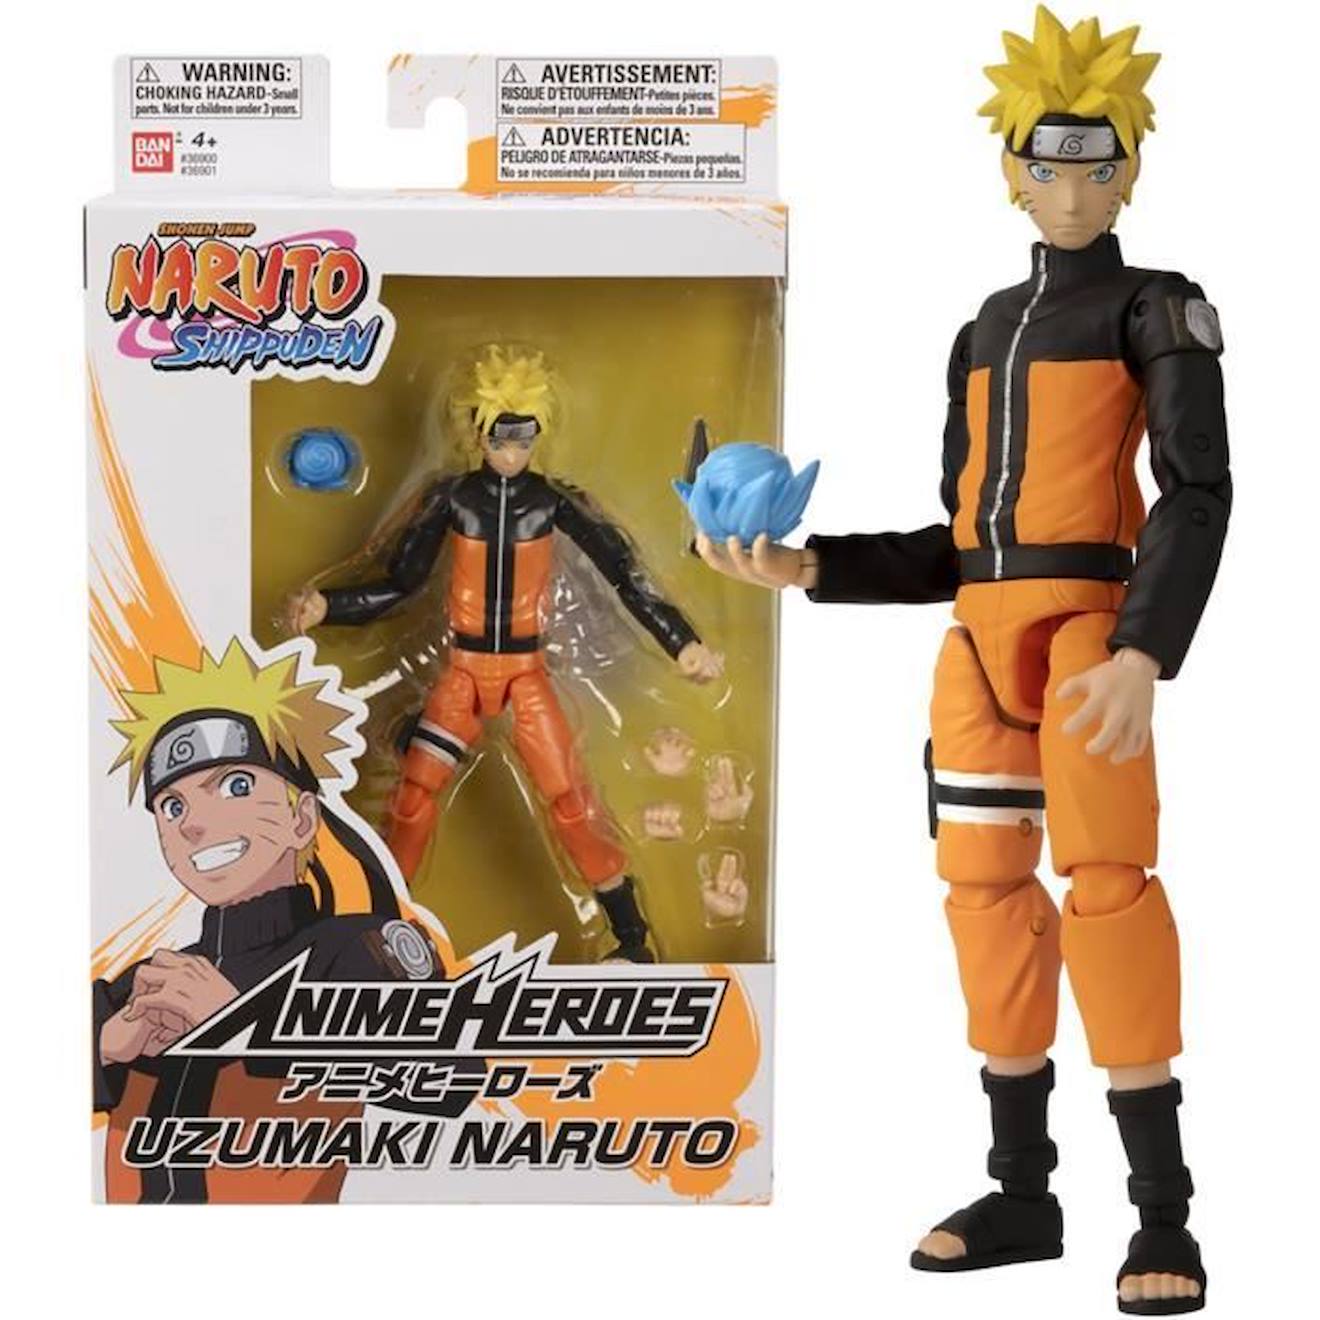 Figurine Anime Heroes Naruto Uzumaki 17 Cm - Bandai - Collectionnez Toutes Les Figurines Anime Heroe